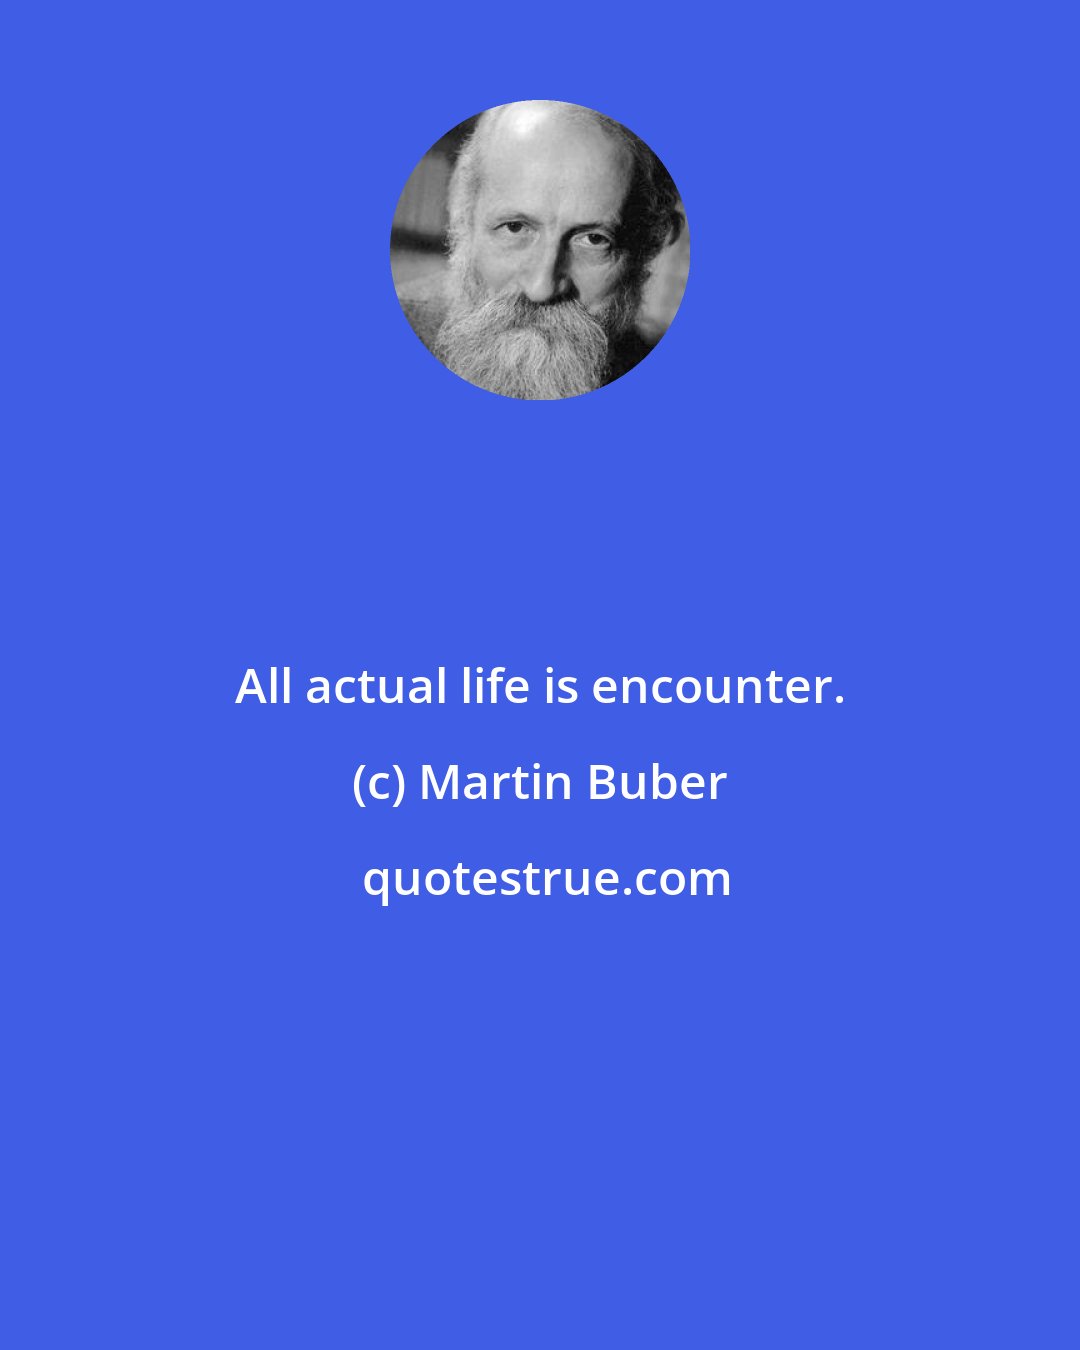 Martin Buber: All actual life is encounter.